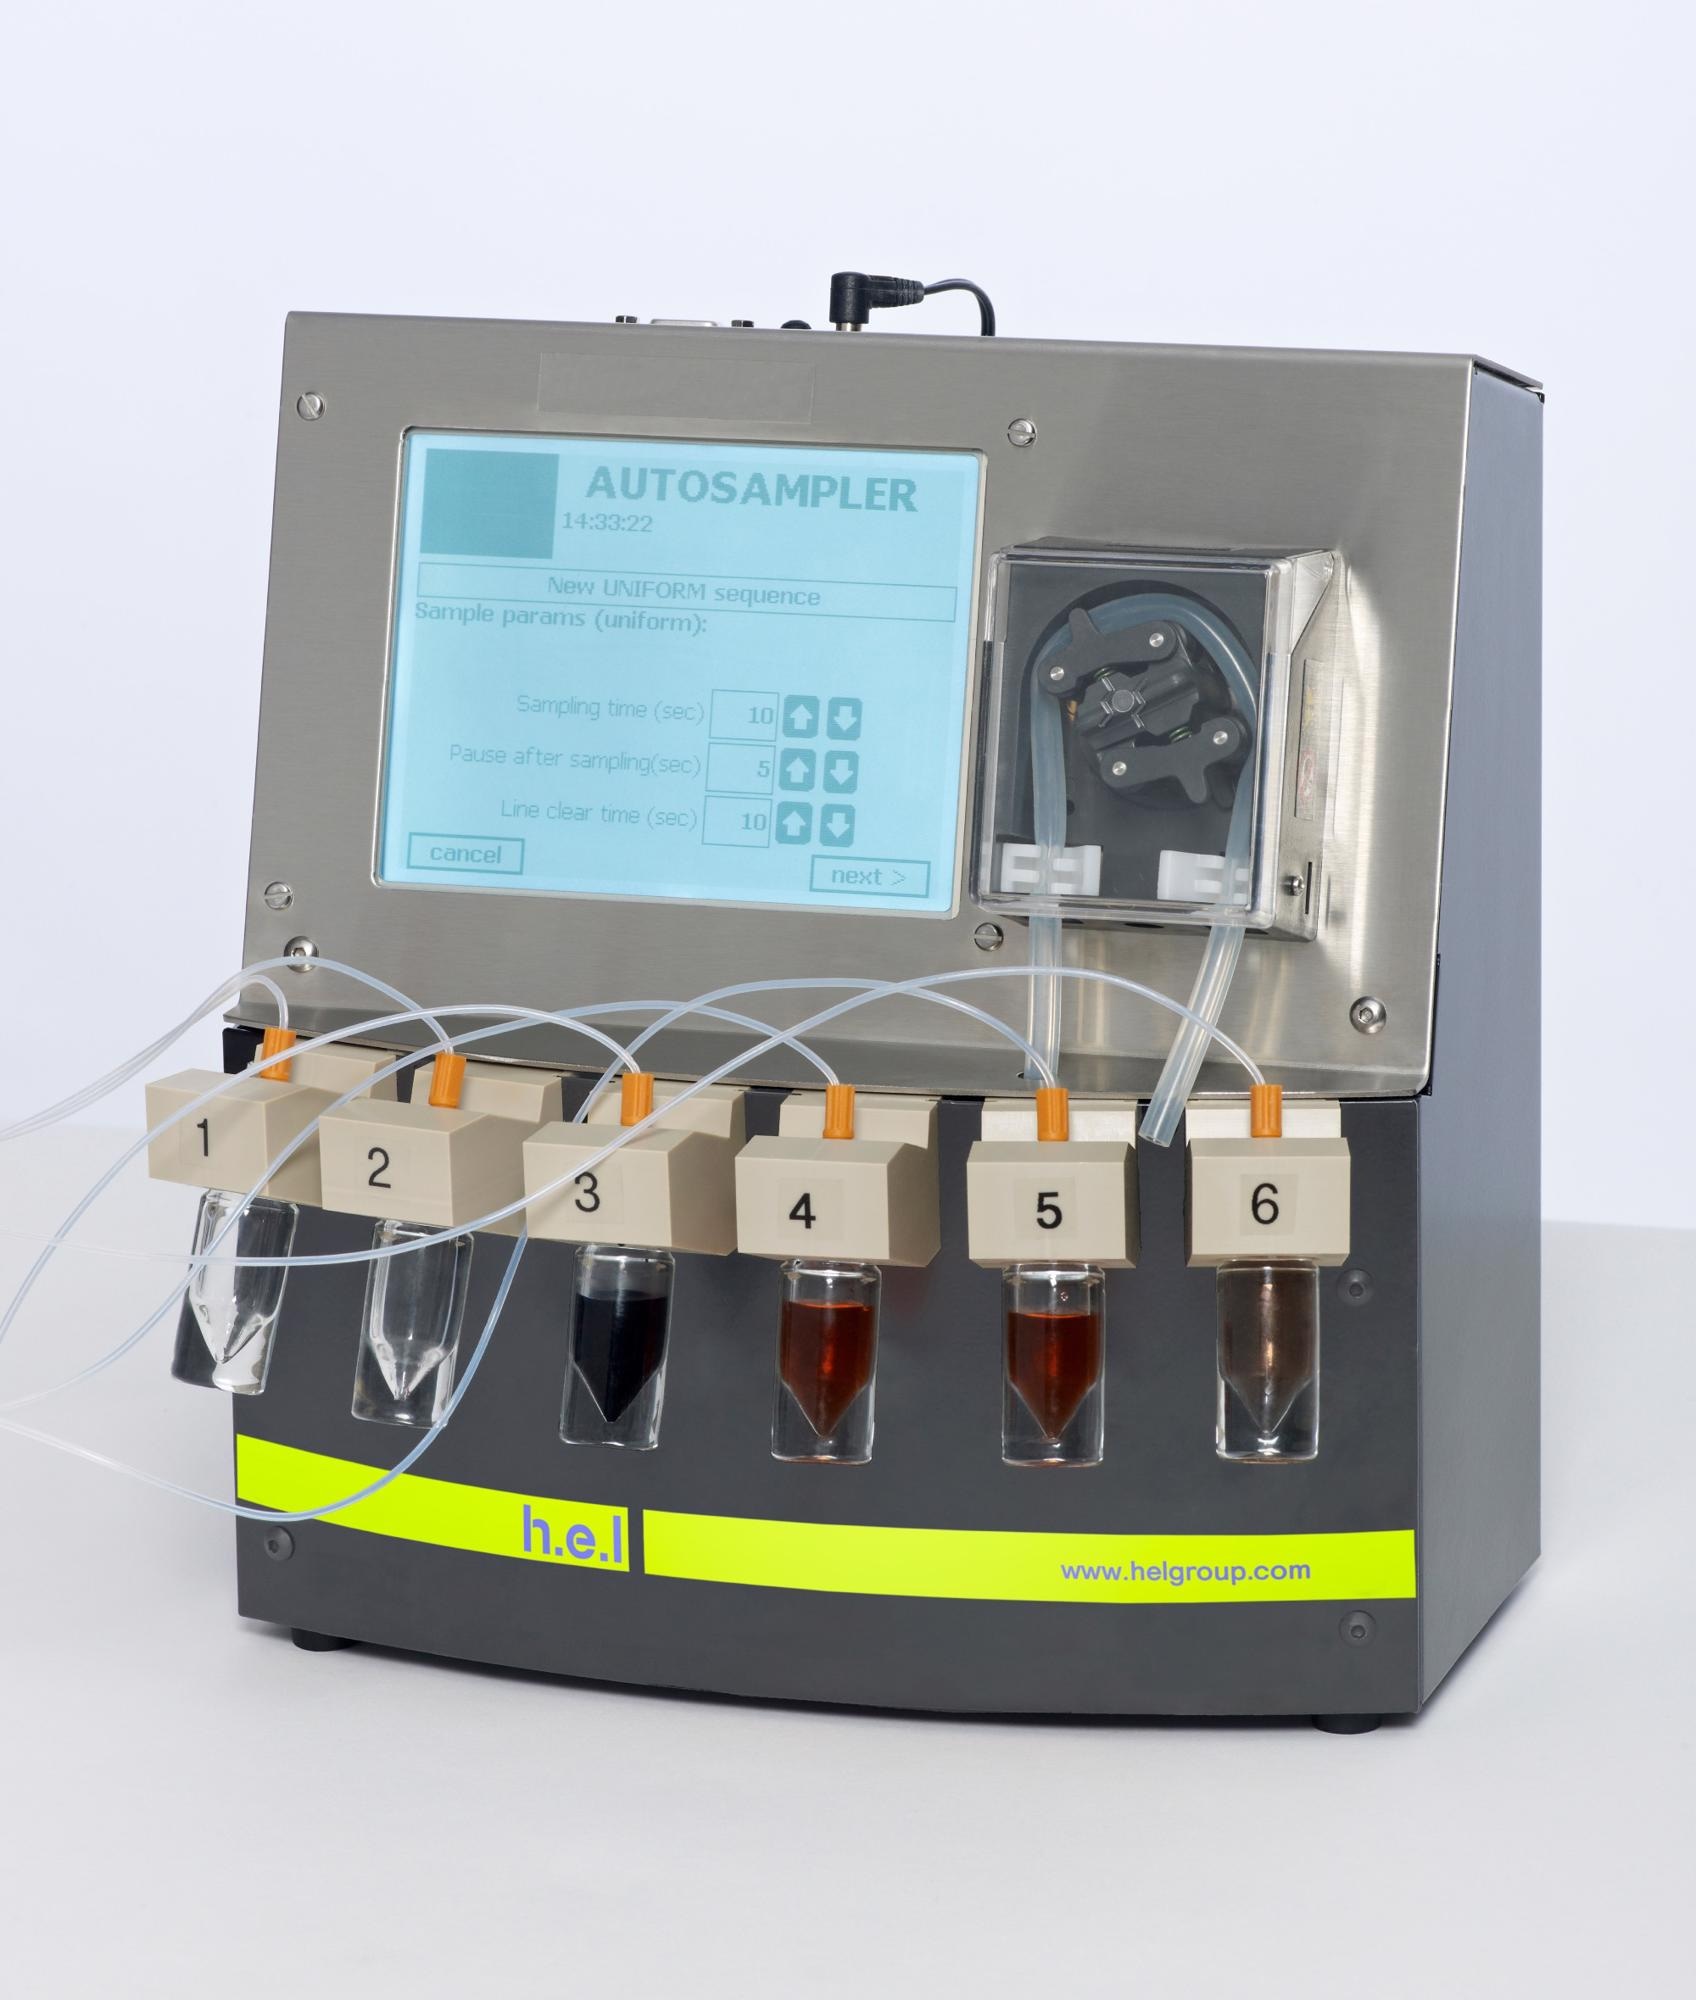 ASU: An Automated Liquid Sampling Unit